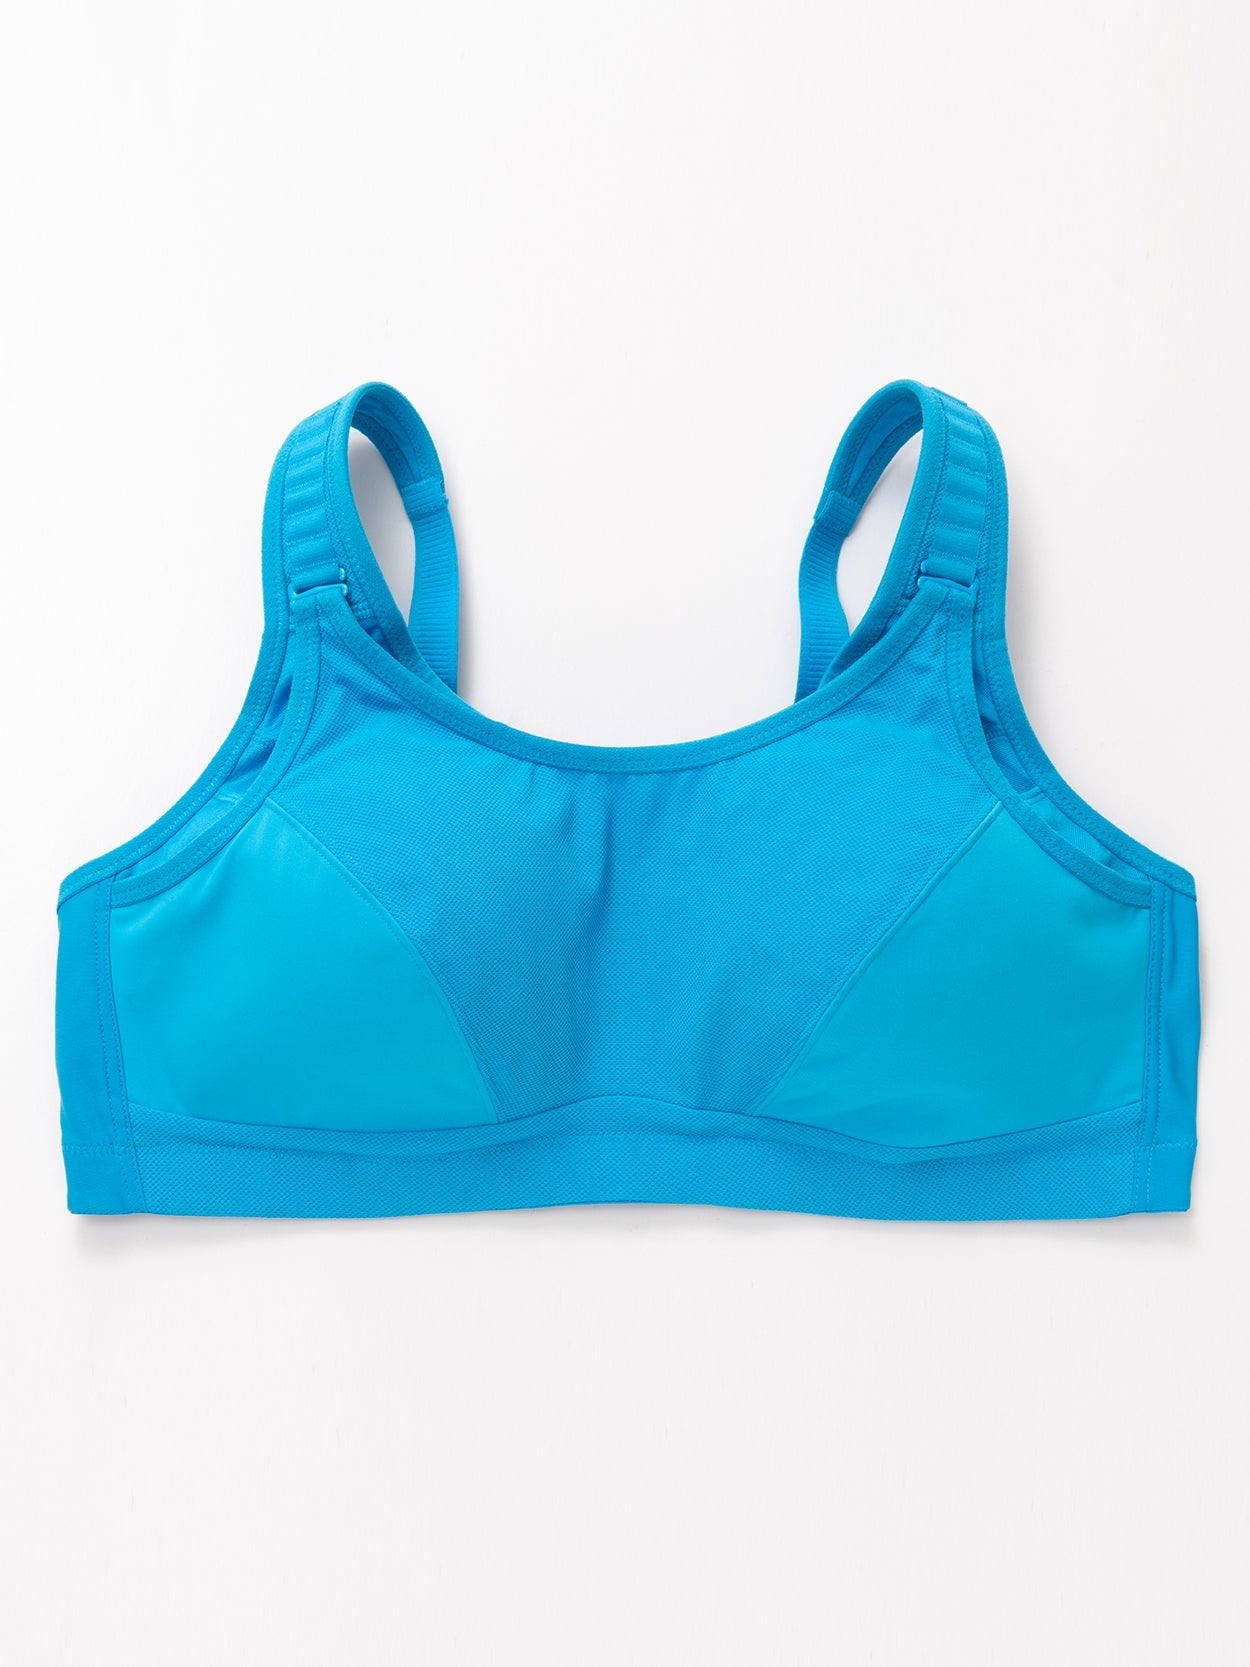 Buy DONSON Women Racerback Sports Bras - High Impact Workout Gym Active  wear Bra Free Size (28 Till 34) Blue at